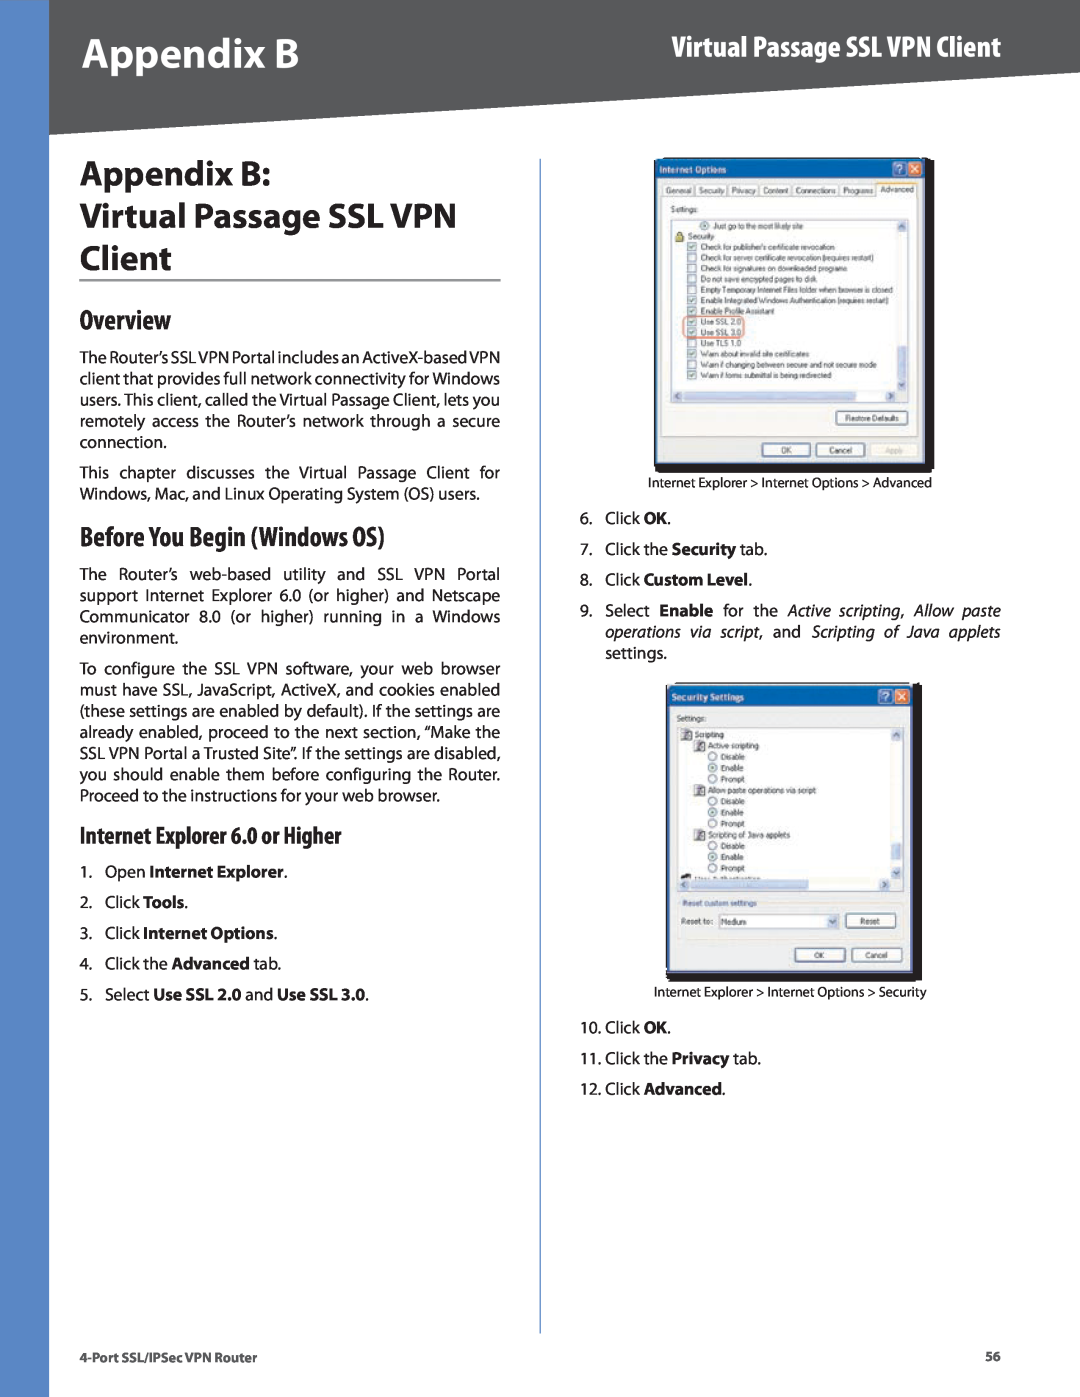 Cisco Systems RVL200 Appendix B Virtual Passage SSL VPN Client, Before You Begin Windows OS, Overview, Click Advanced 